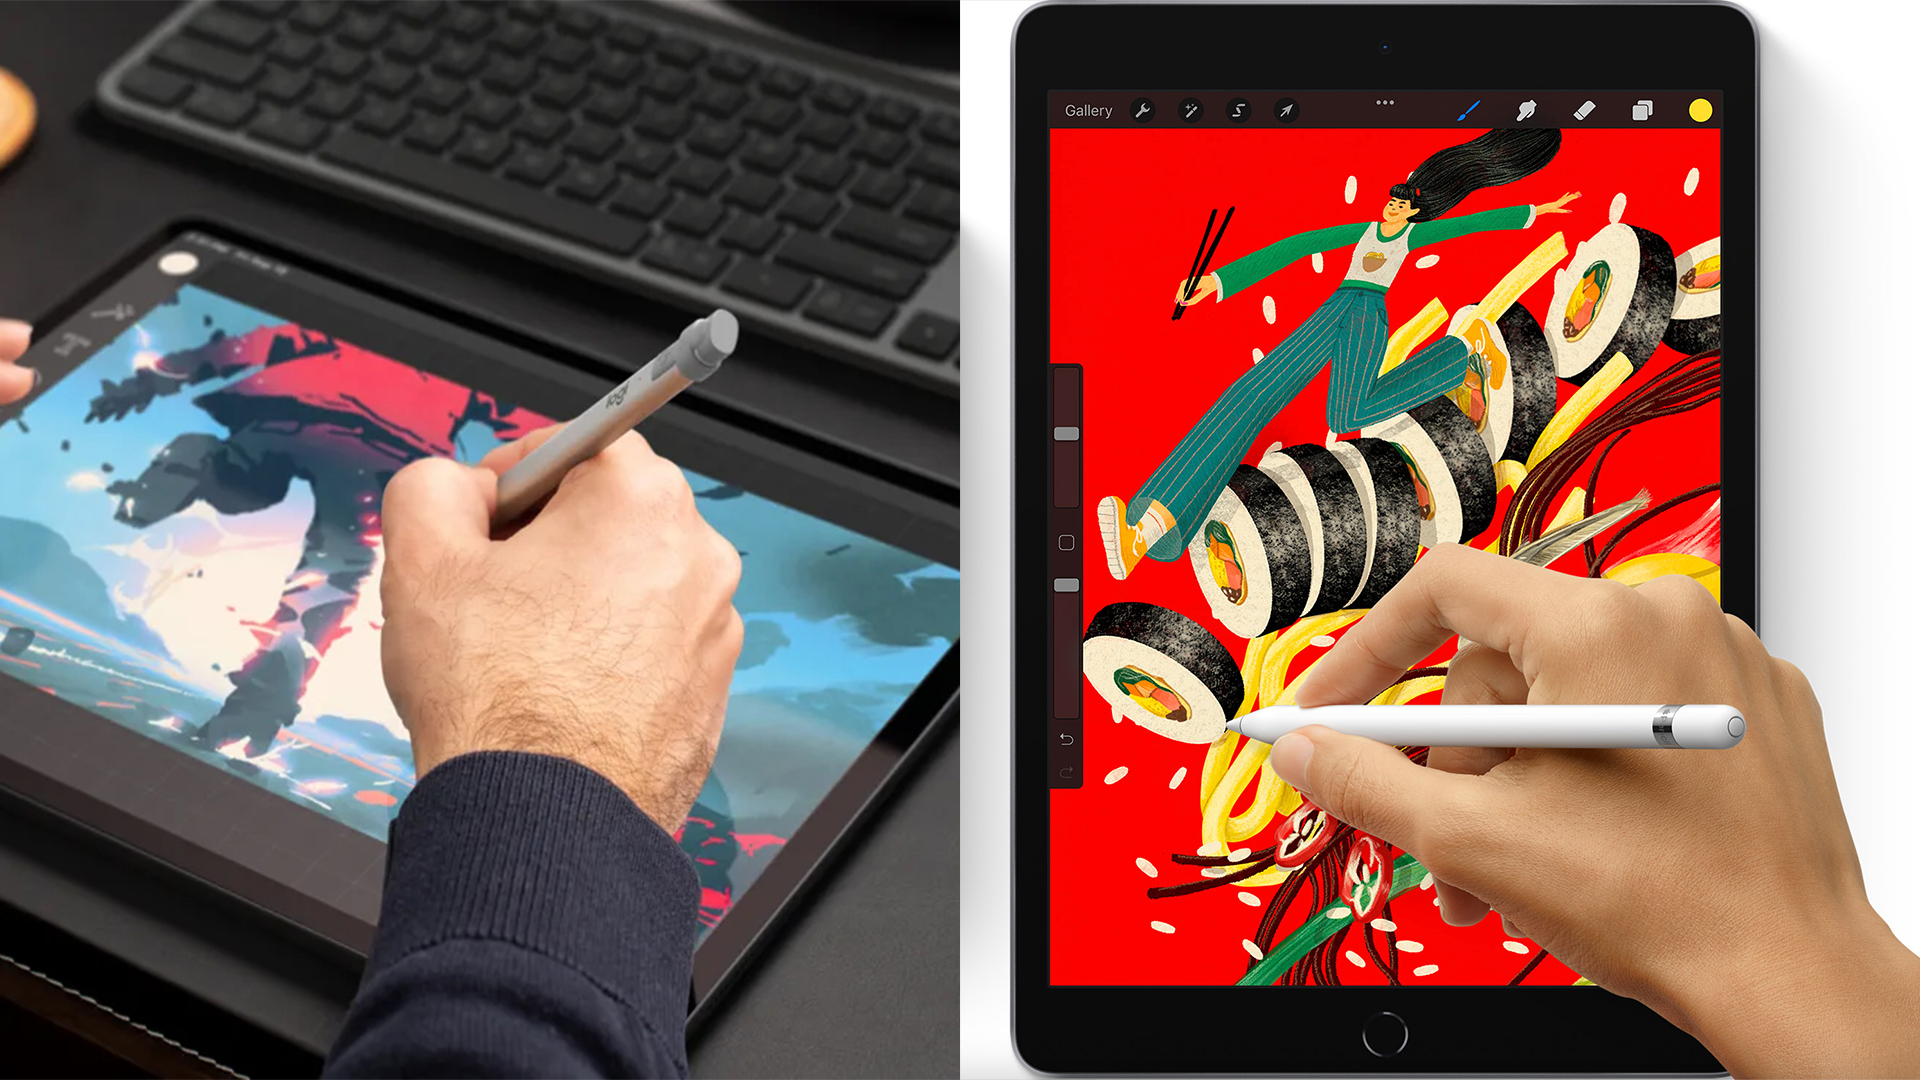 Logitech Crayon for iPad - Orange - Education - Apple